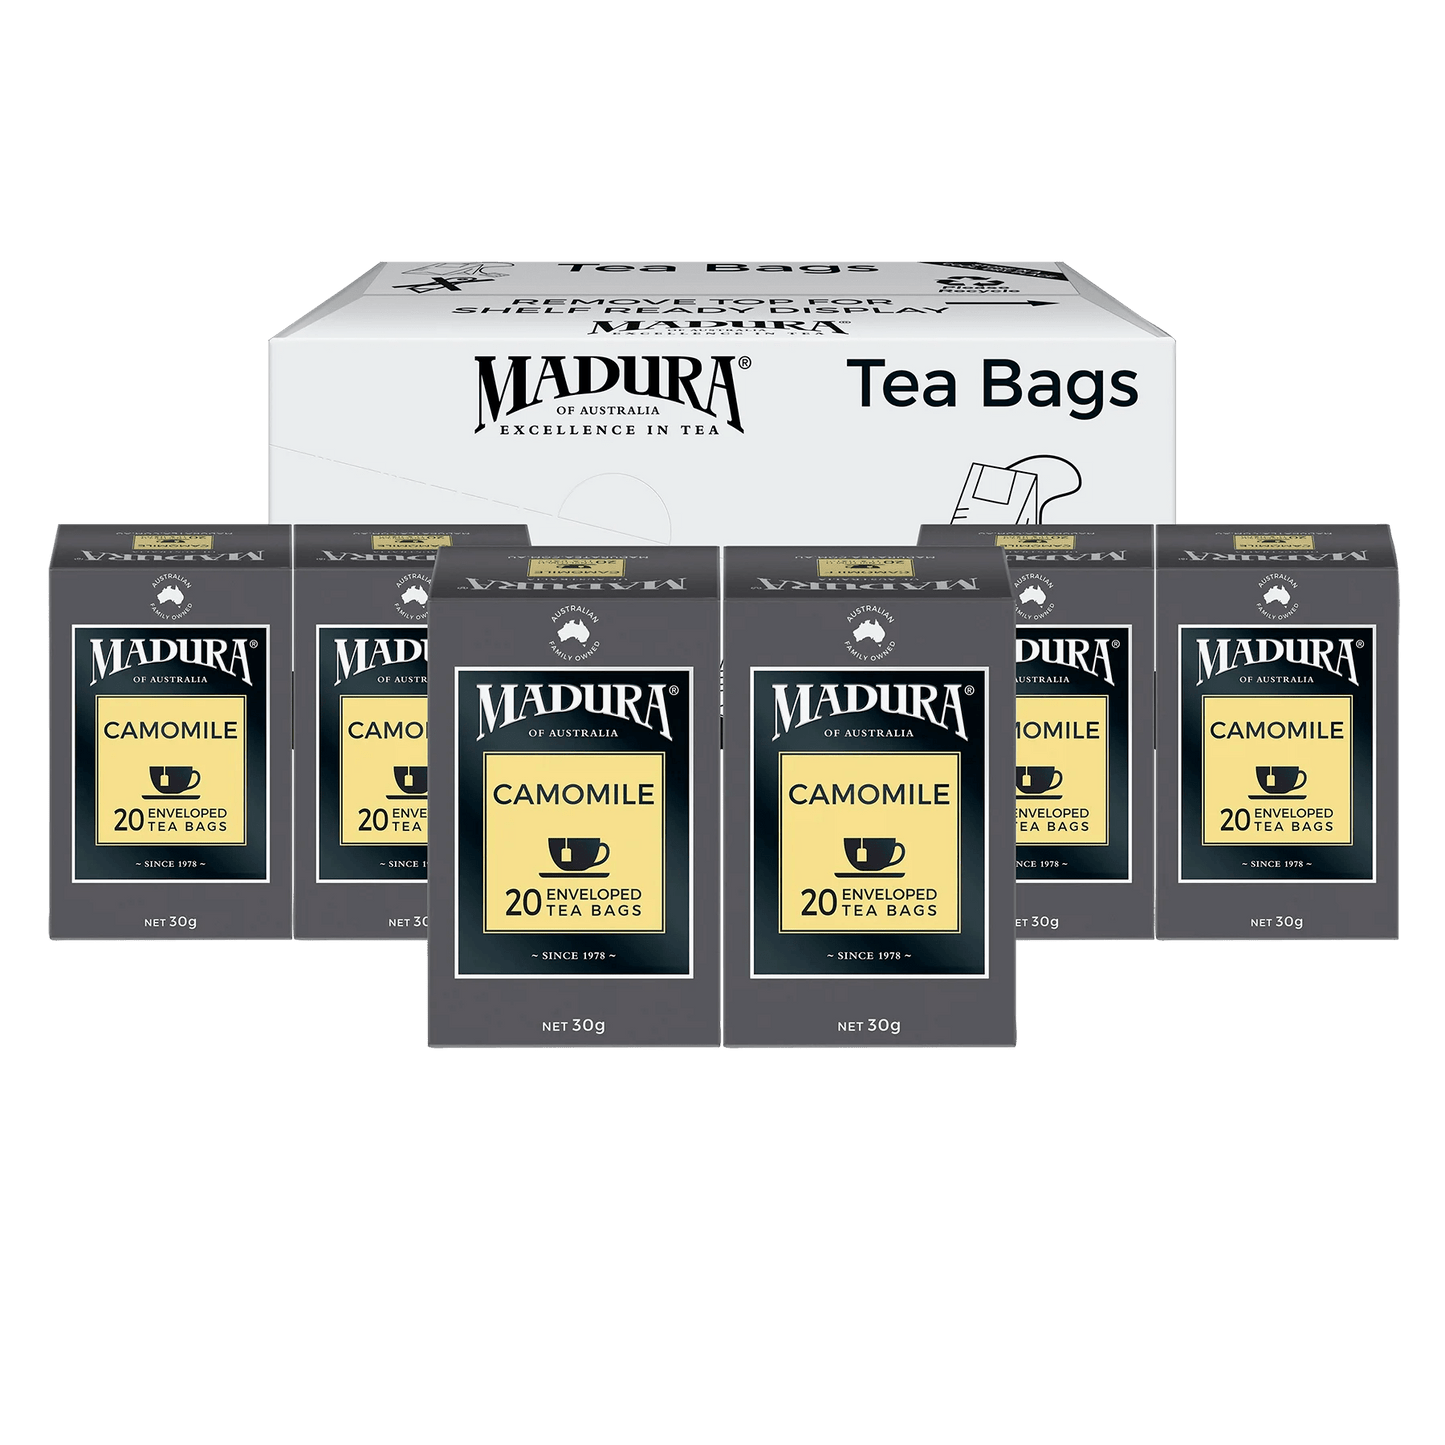 Camomile 20 Enveloped Tea Bags - Madura Tea